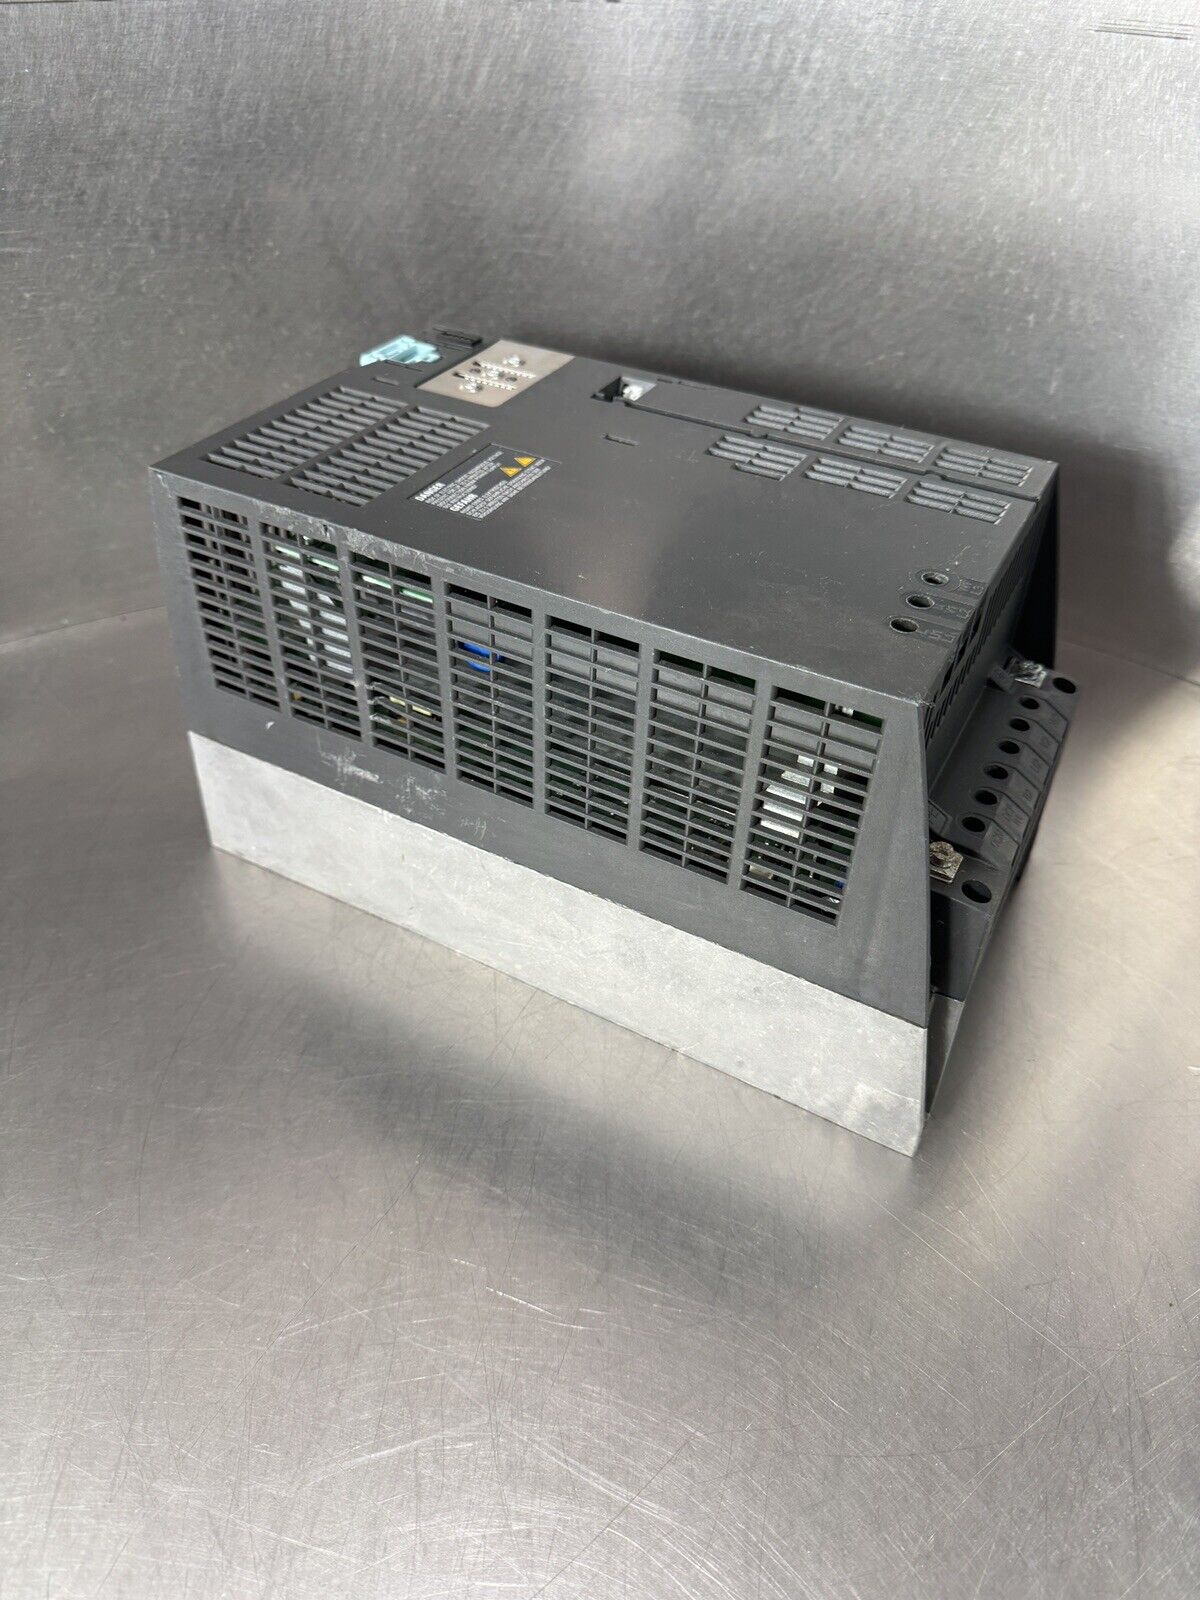 Siemens Sinamics Power Module 240 6SL3224-0BE25-5UA0 Version: D02 (Bin1.6.1)